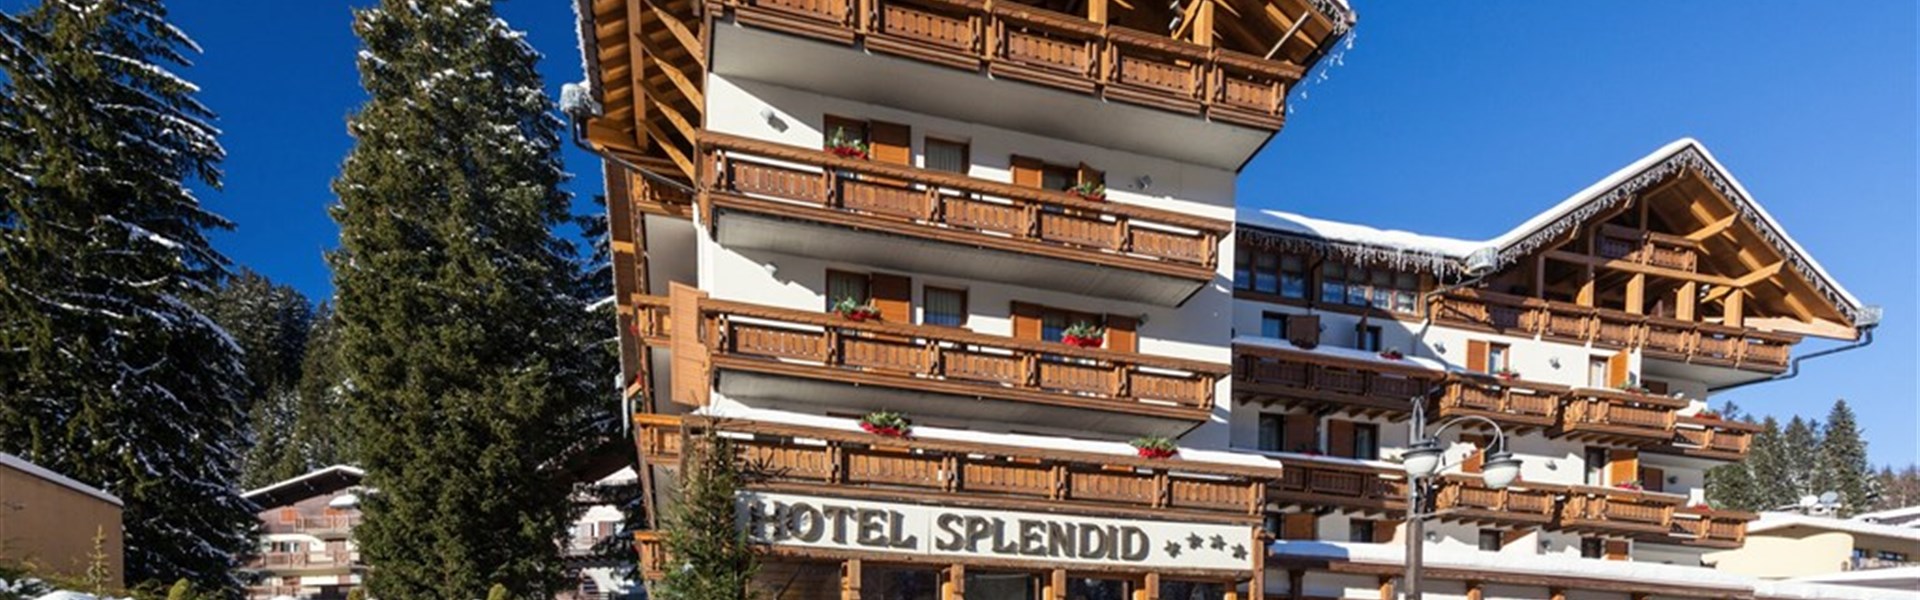 Marco Polo - Hotel Splendid - 